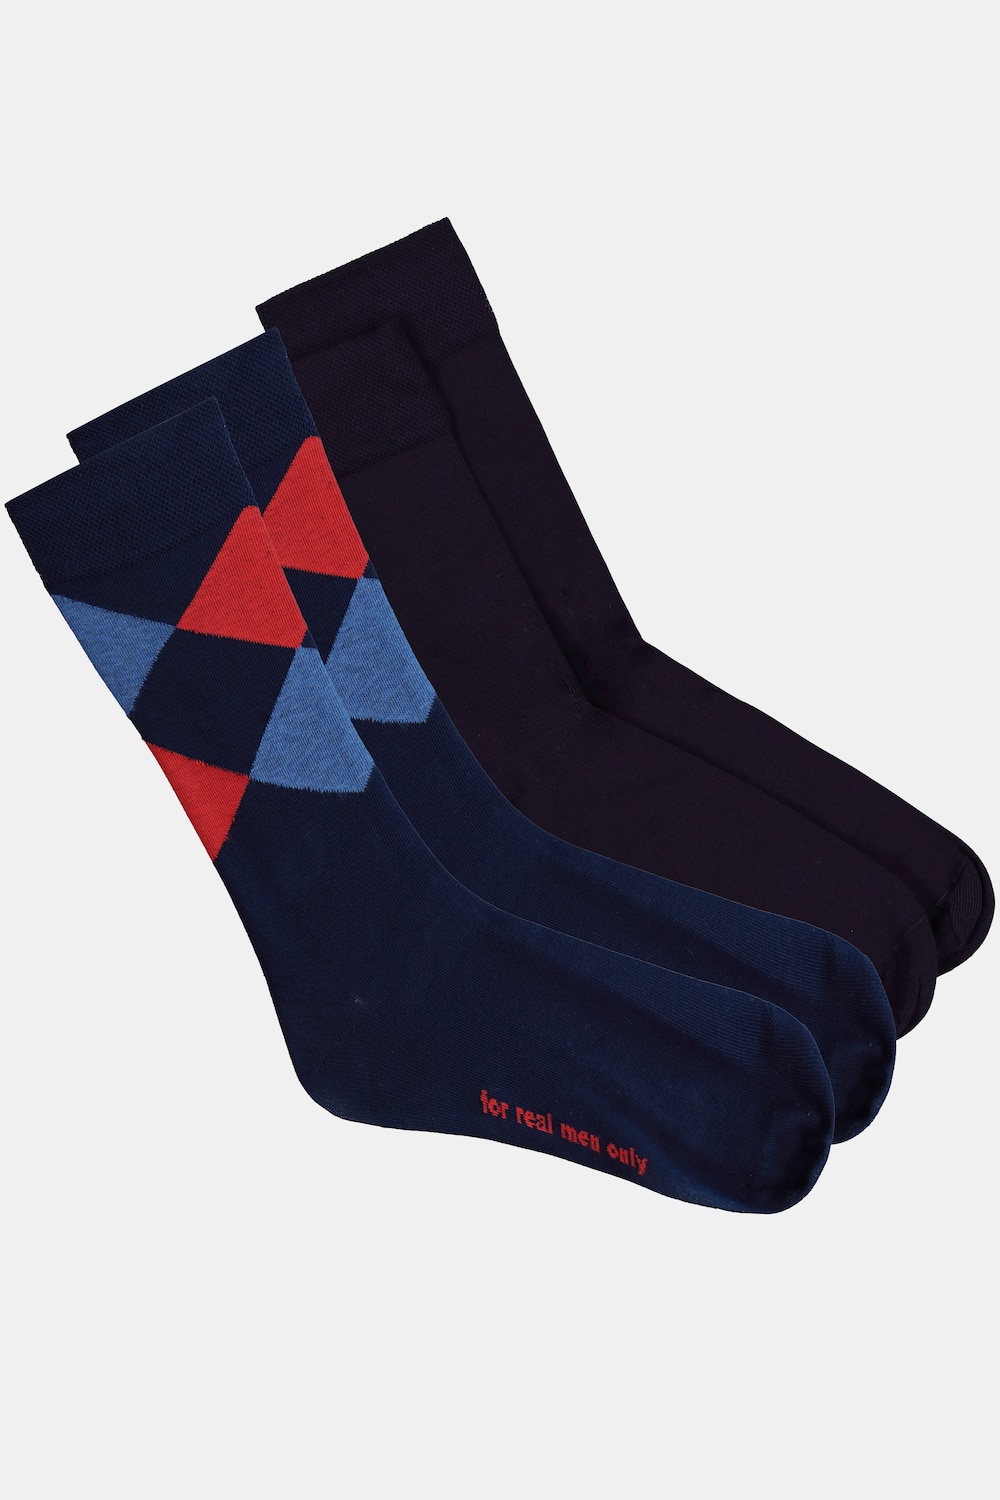 Image of Grosse Grössen JP1880 Socken, Herren, blau, Größe: 51-53, Baumwolle/Synthetische Fasern, JP1880